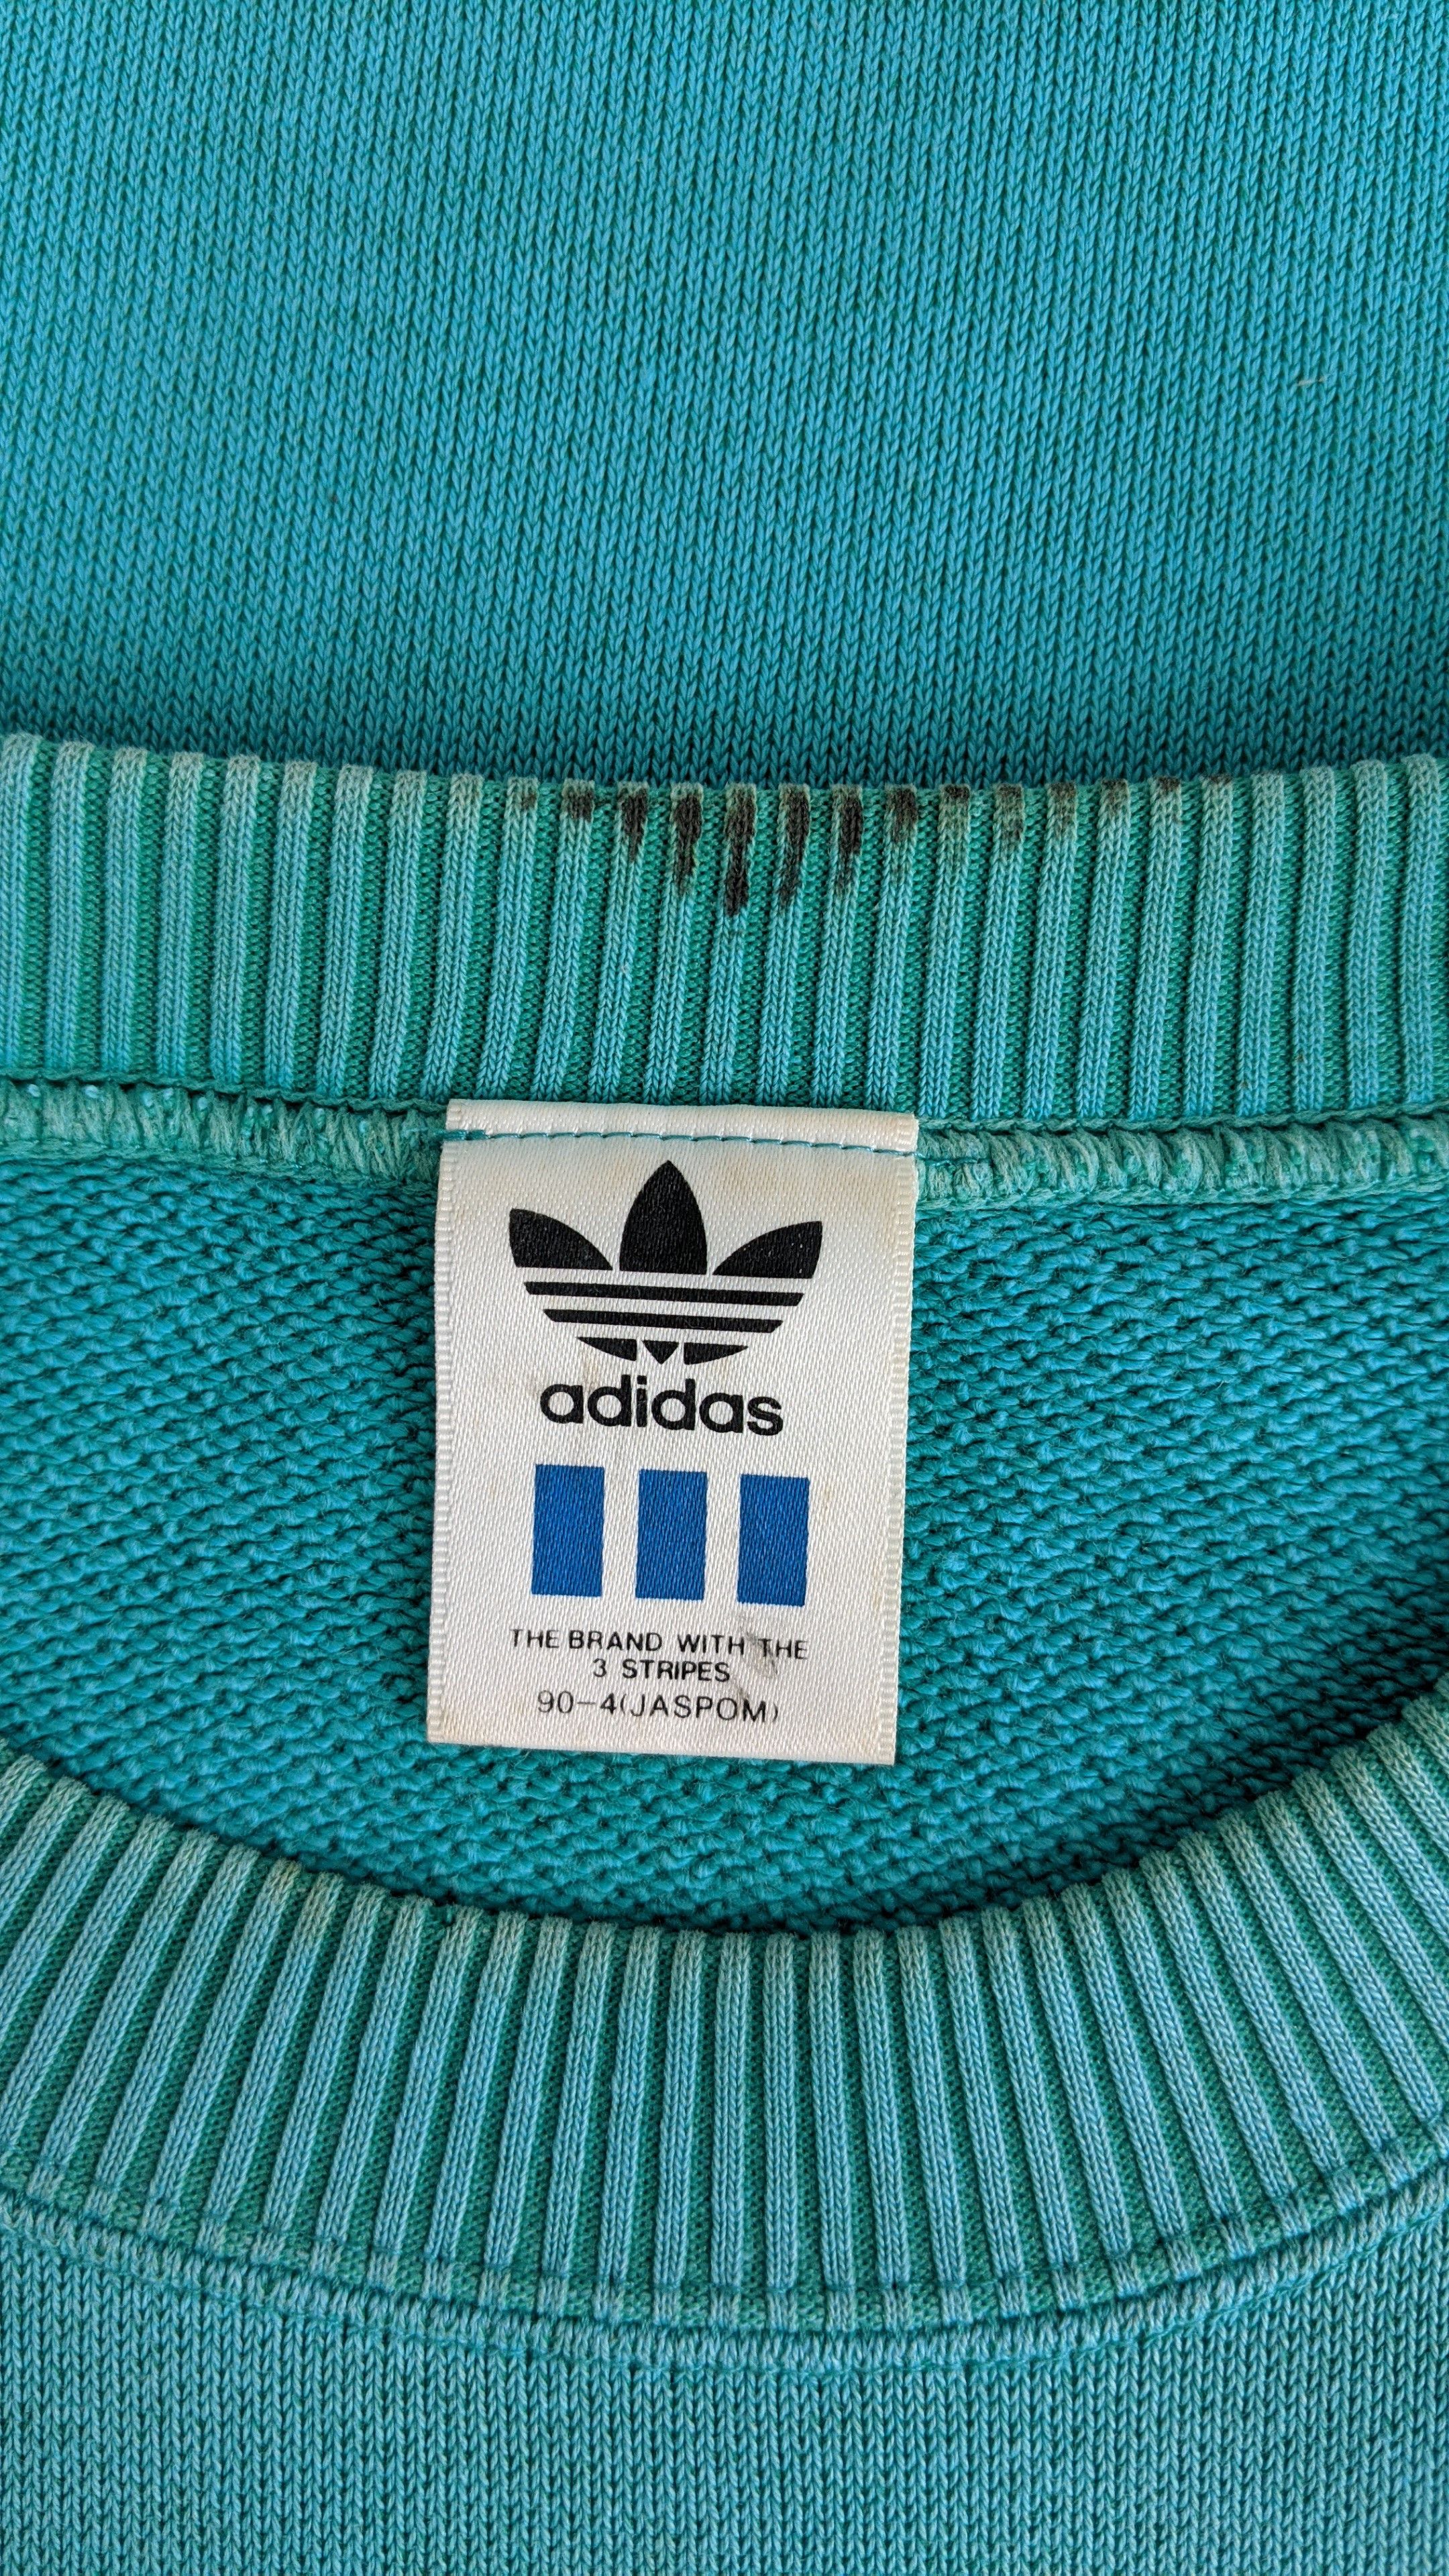 Adidas Vintage Adidas Passport sweatshirt Size US M / EU 48-50 / 2 - 6 Preview